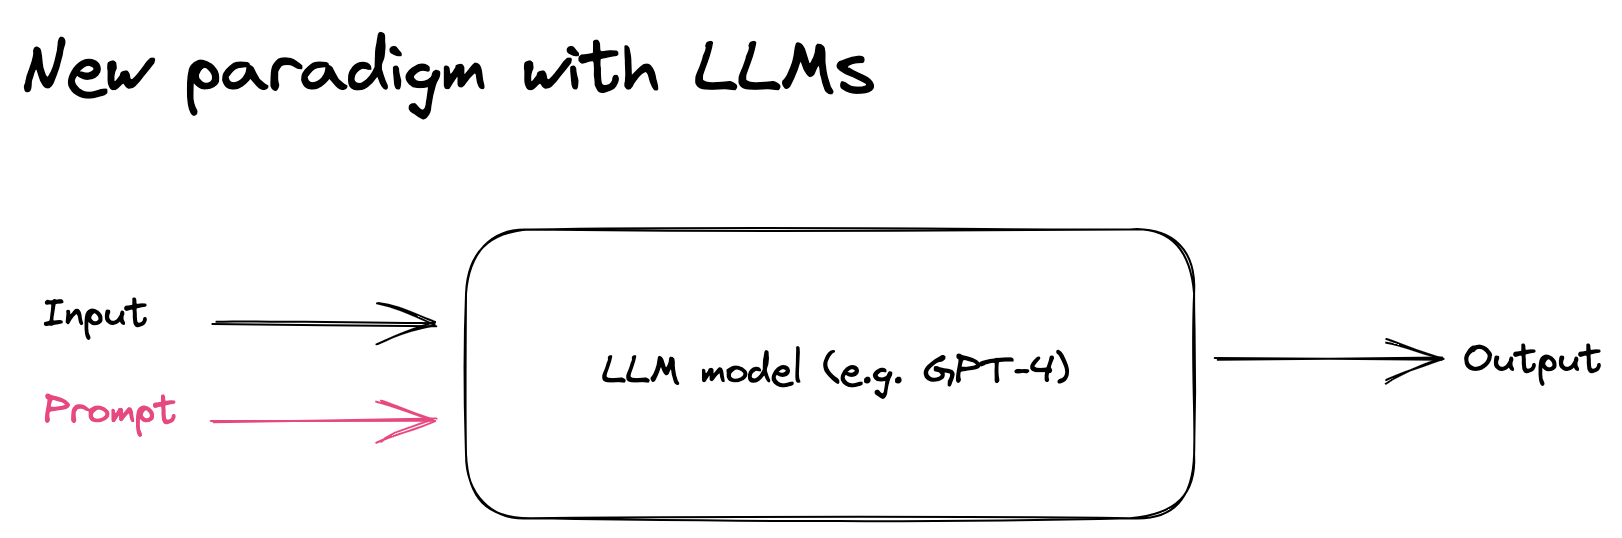 llm_engineering